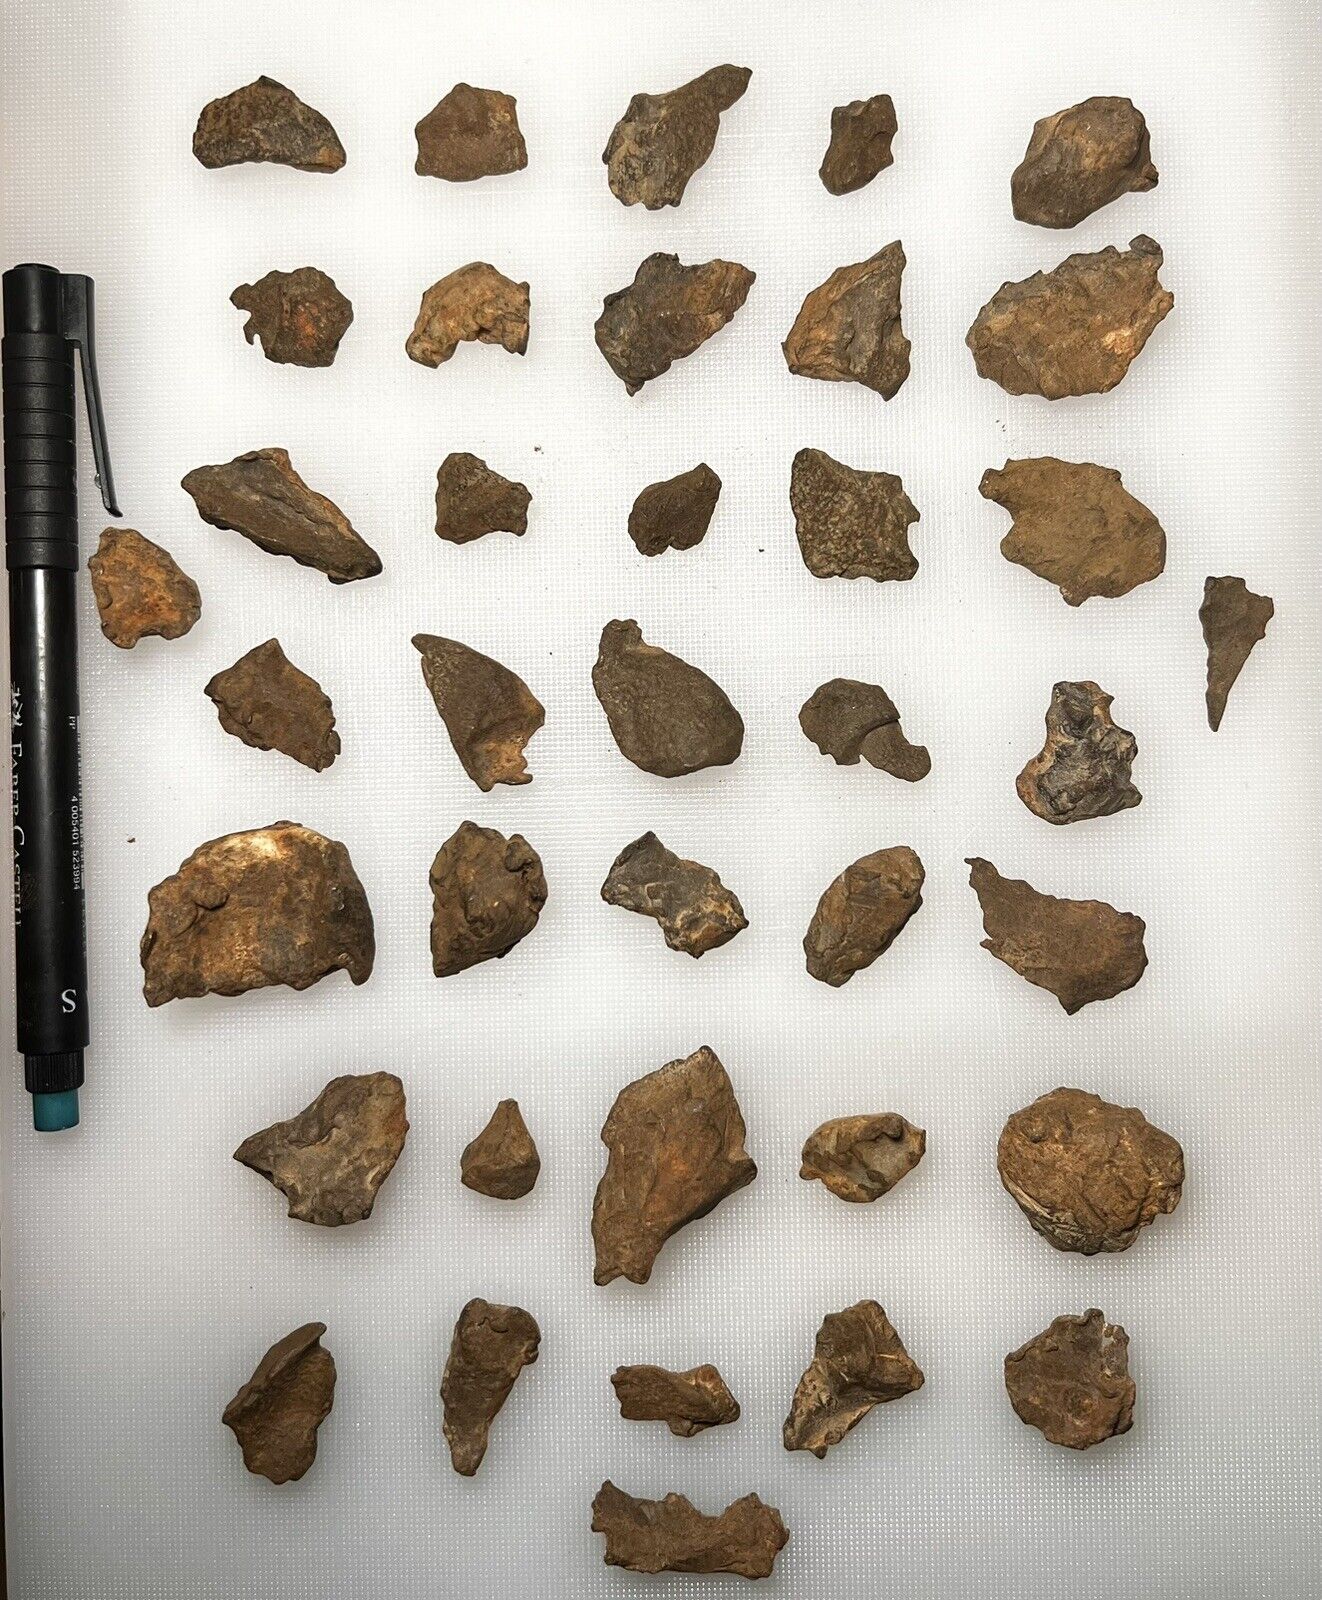 Gebel Kamil Small iron meteorite shrapnel 535g lot